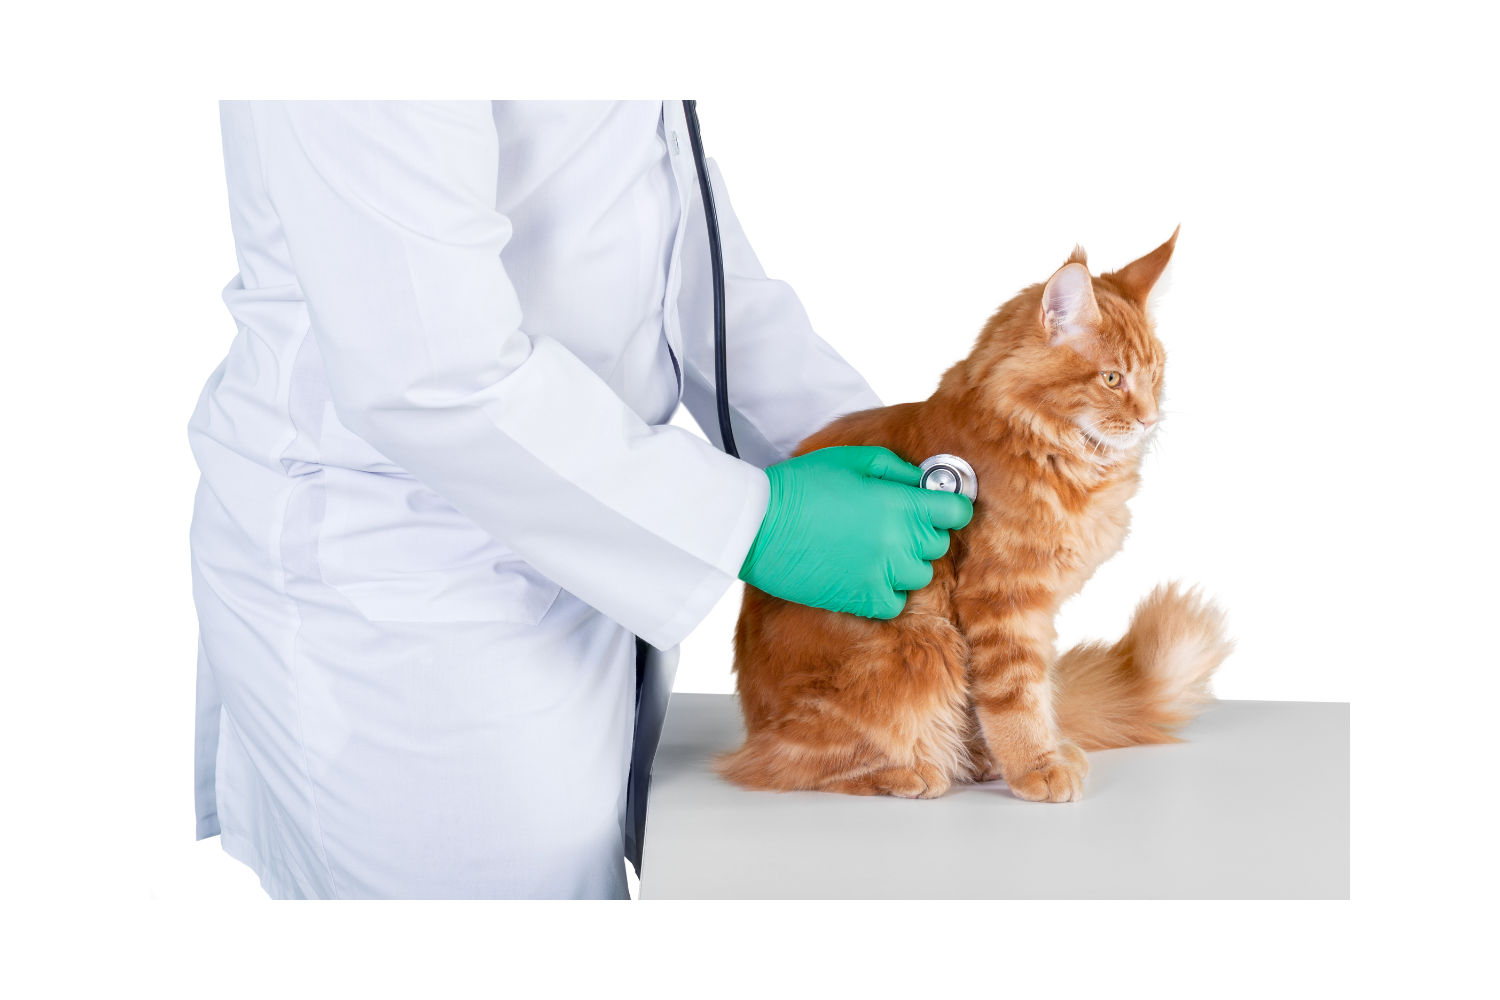 Veterianrian Examining a Cat